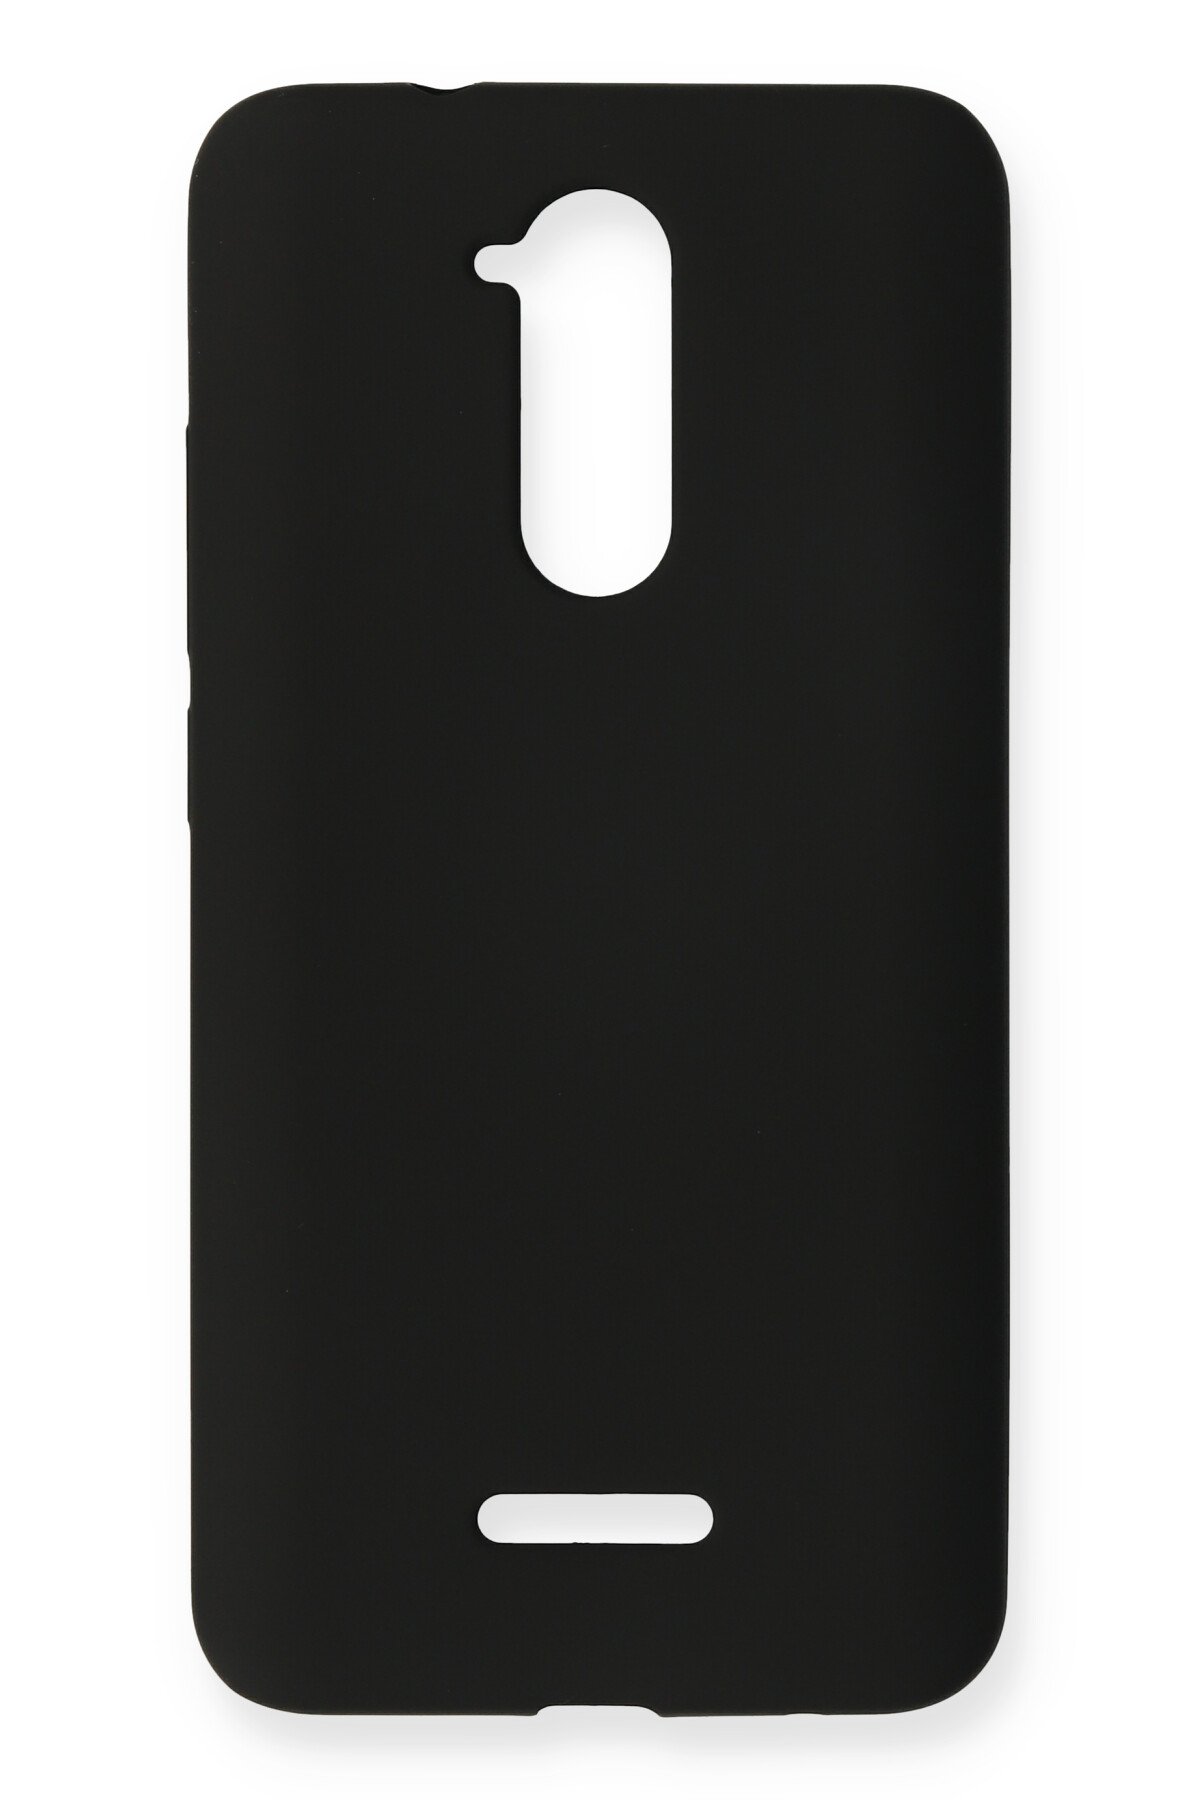 NewFace Newface Casper Via M3 Kılıf Premium Rubber Silikon - Siyah